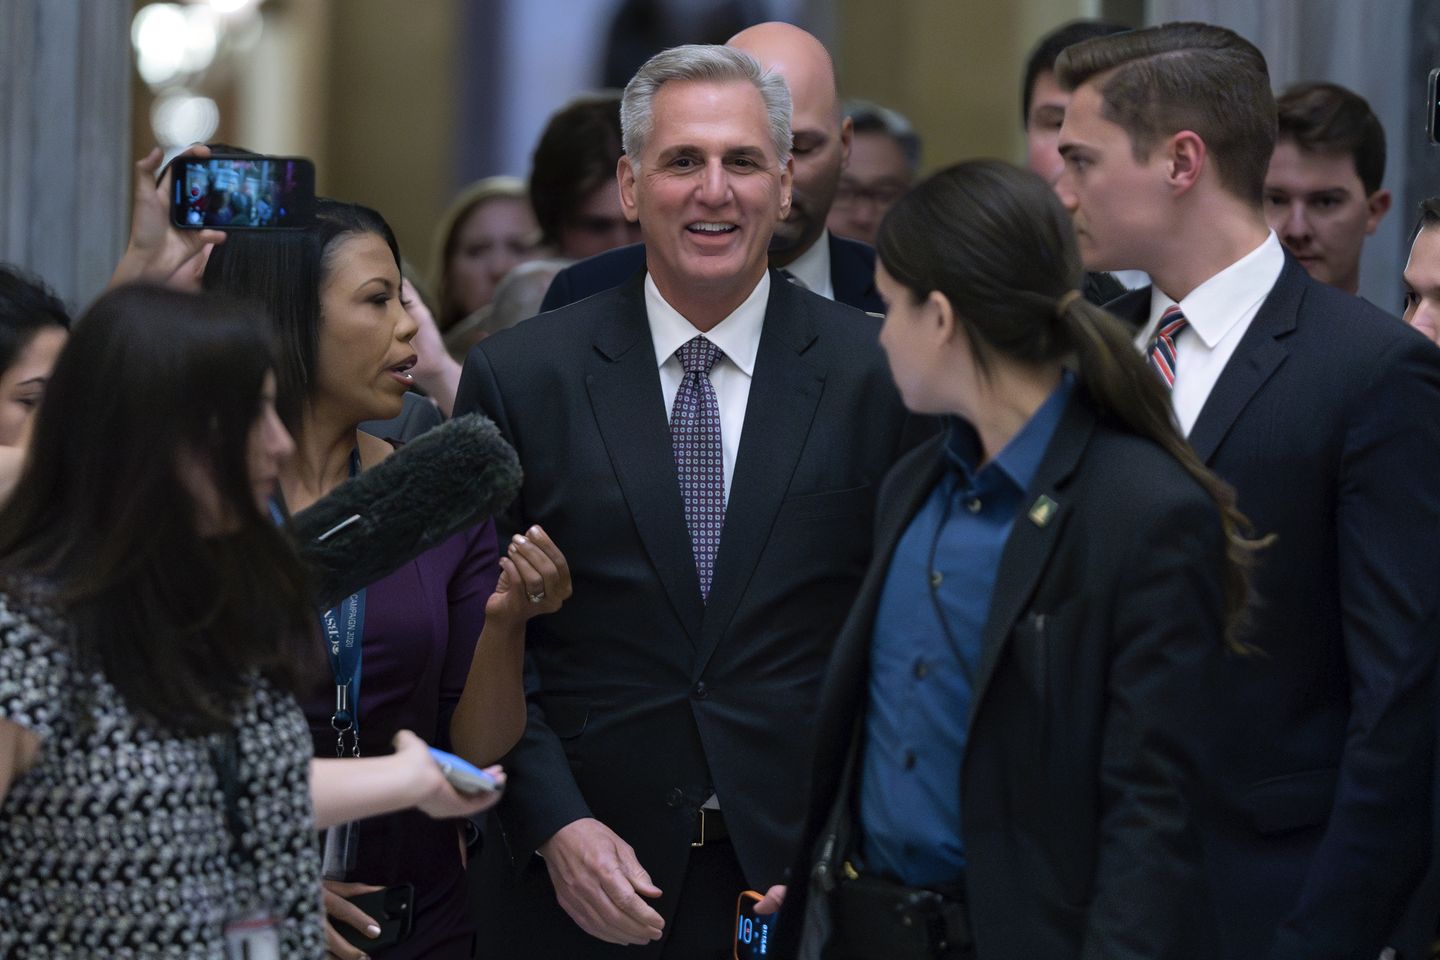 Kevin McCarthy quells conservative revolt, House passes debt-limit deal